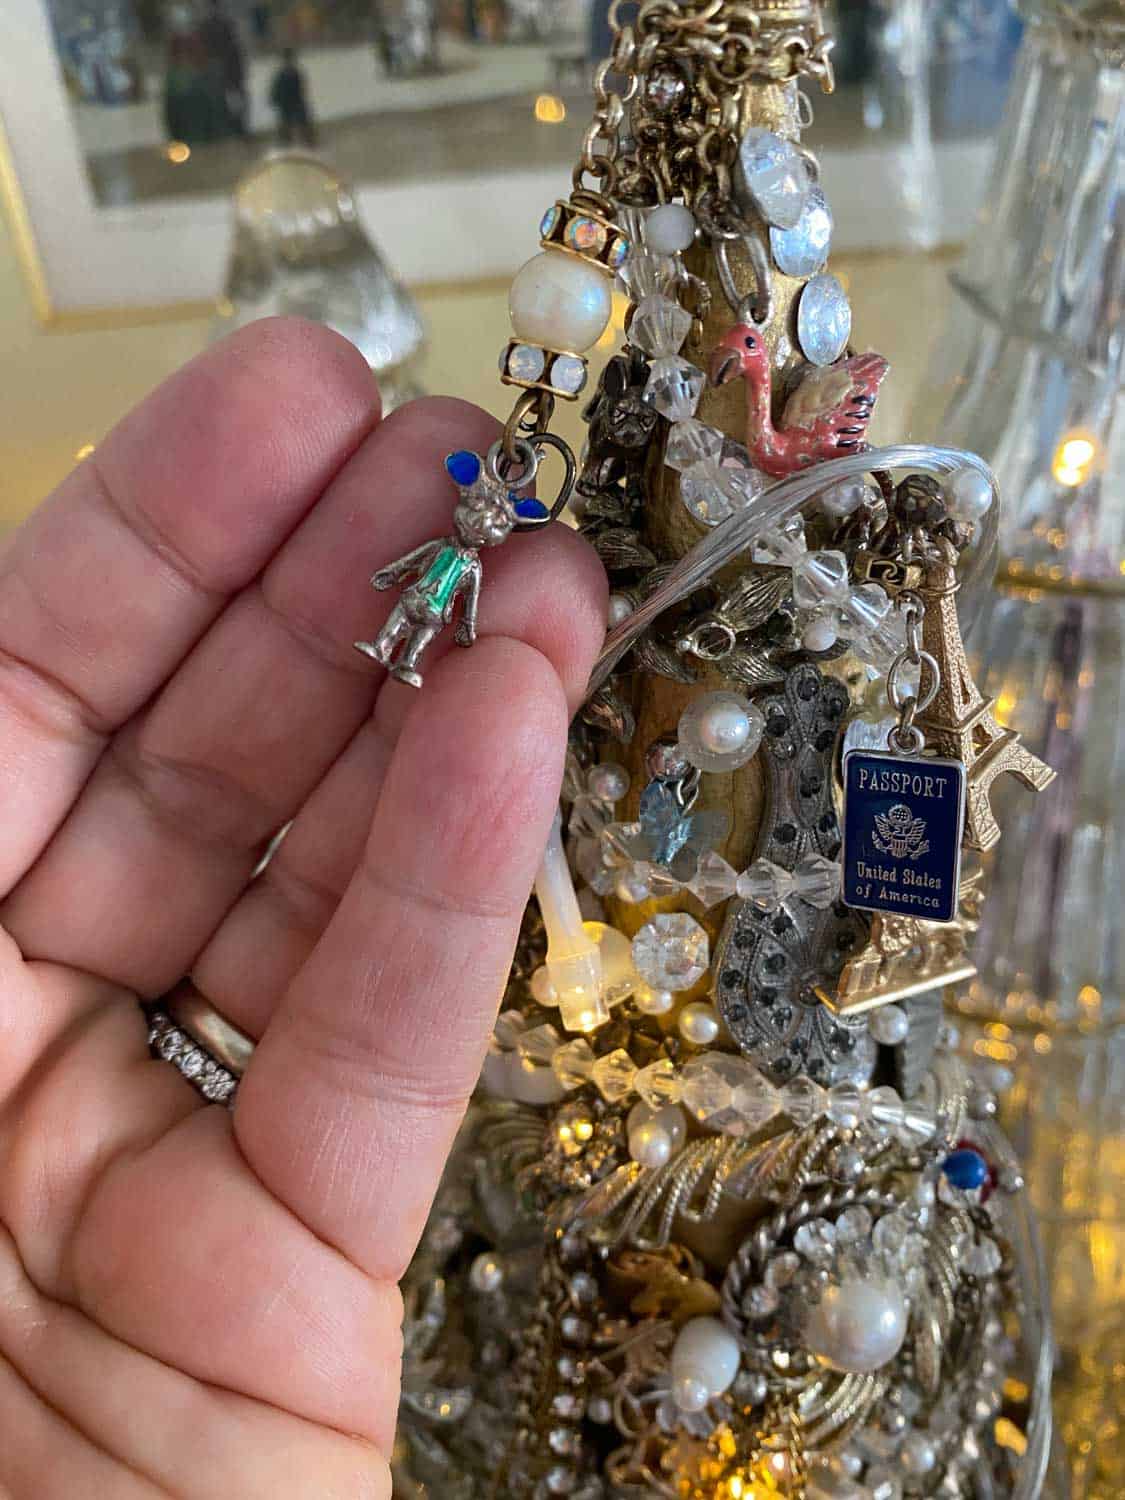 Charms and Vintage jewelry on Homemade jeweled Christmas Tree